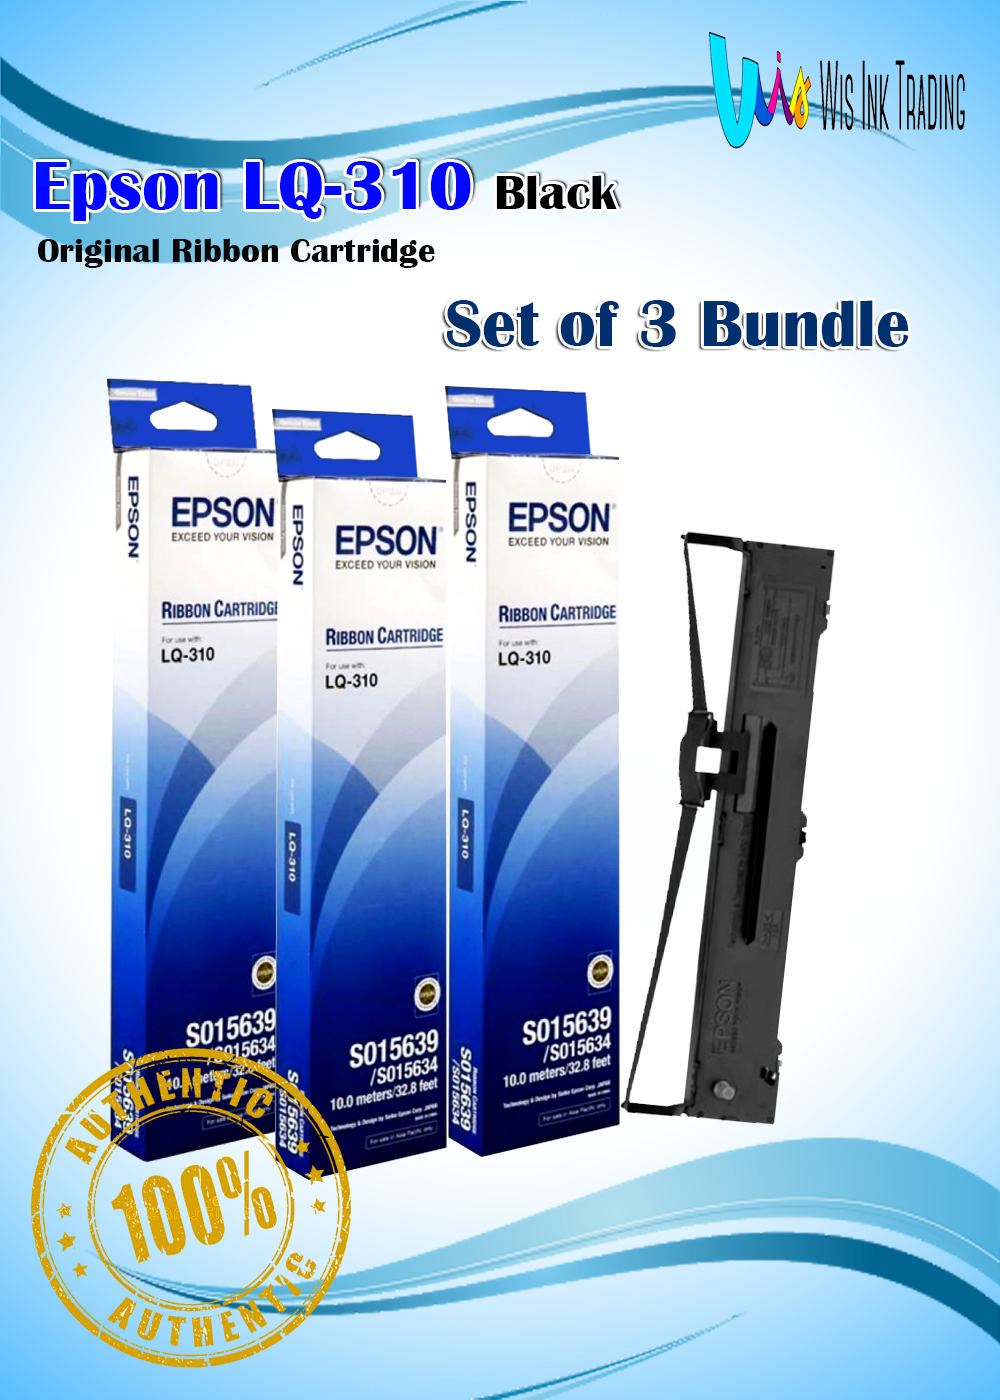 Epson S015639s015634 Original Ribbon Cartridge Black For Epson Lq 310 Printer Set Of 3 Bundle 6712